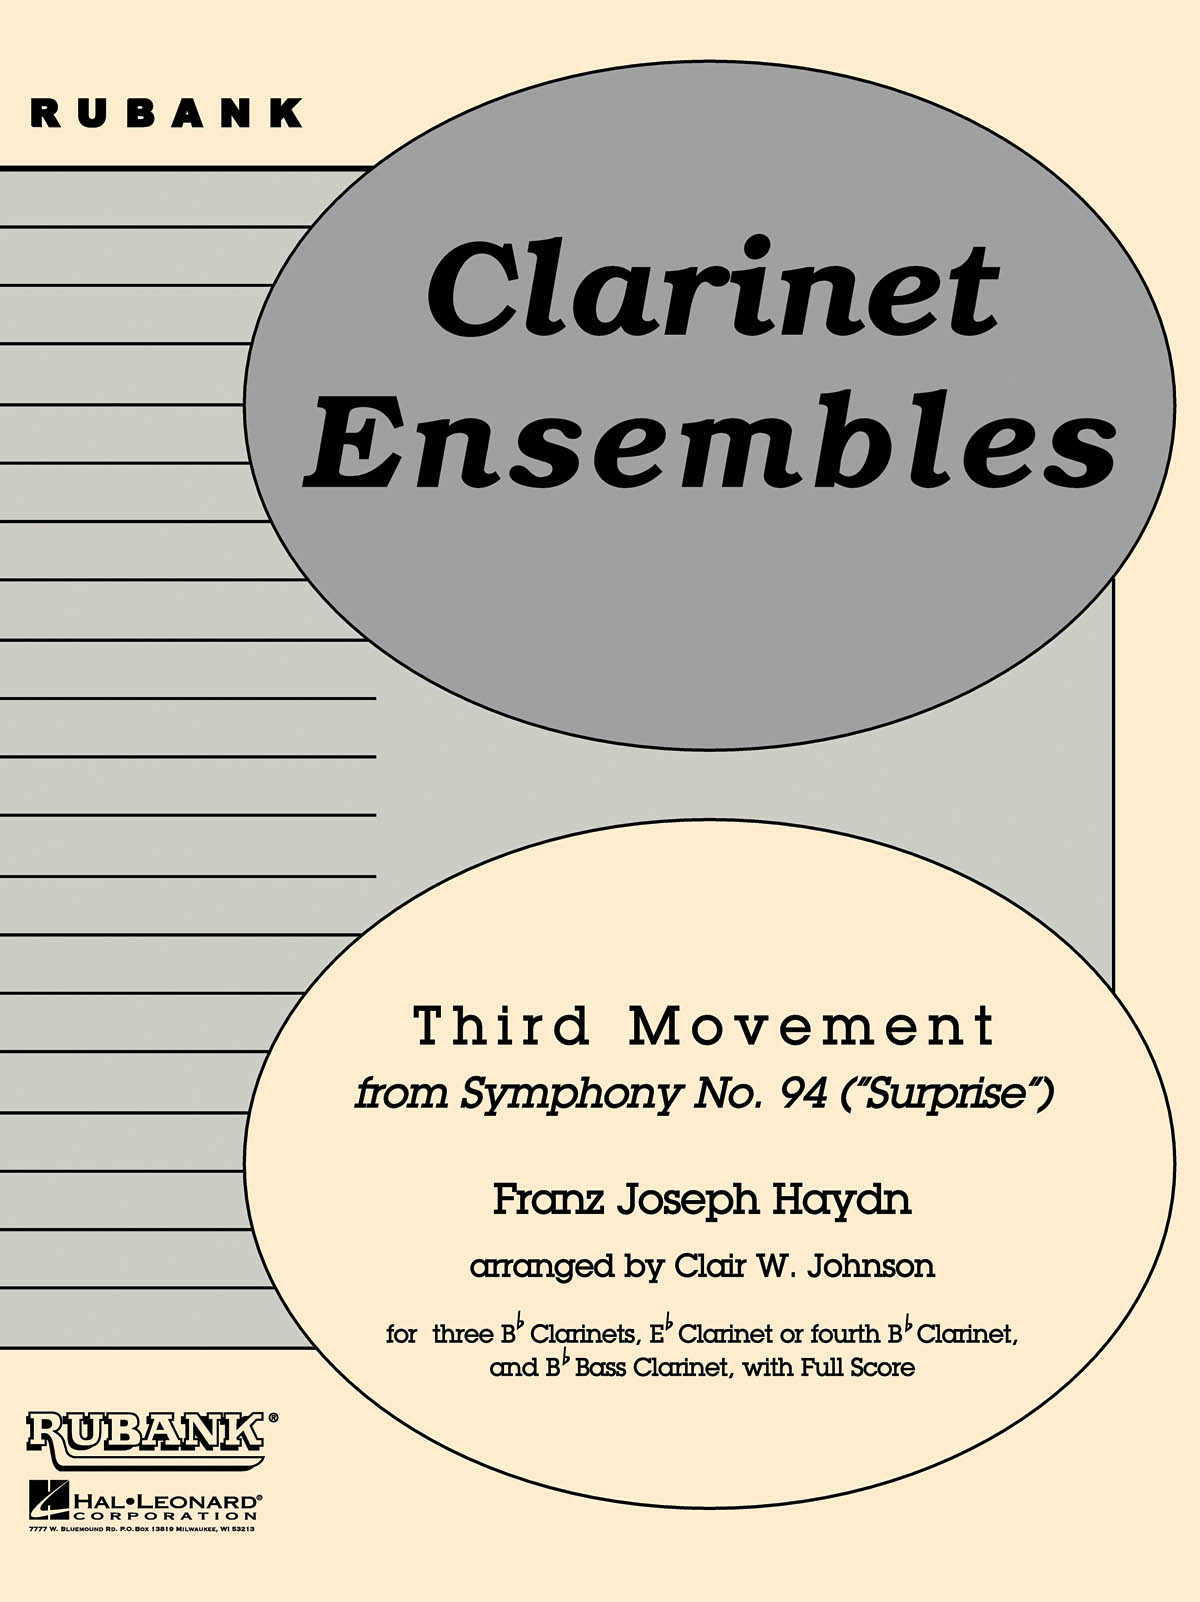 Franz Joseph Haydn: Third Movement from Symph 94 - Surprise: Clarinet Ensemble: